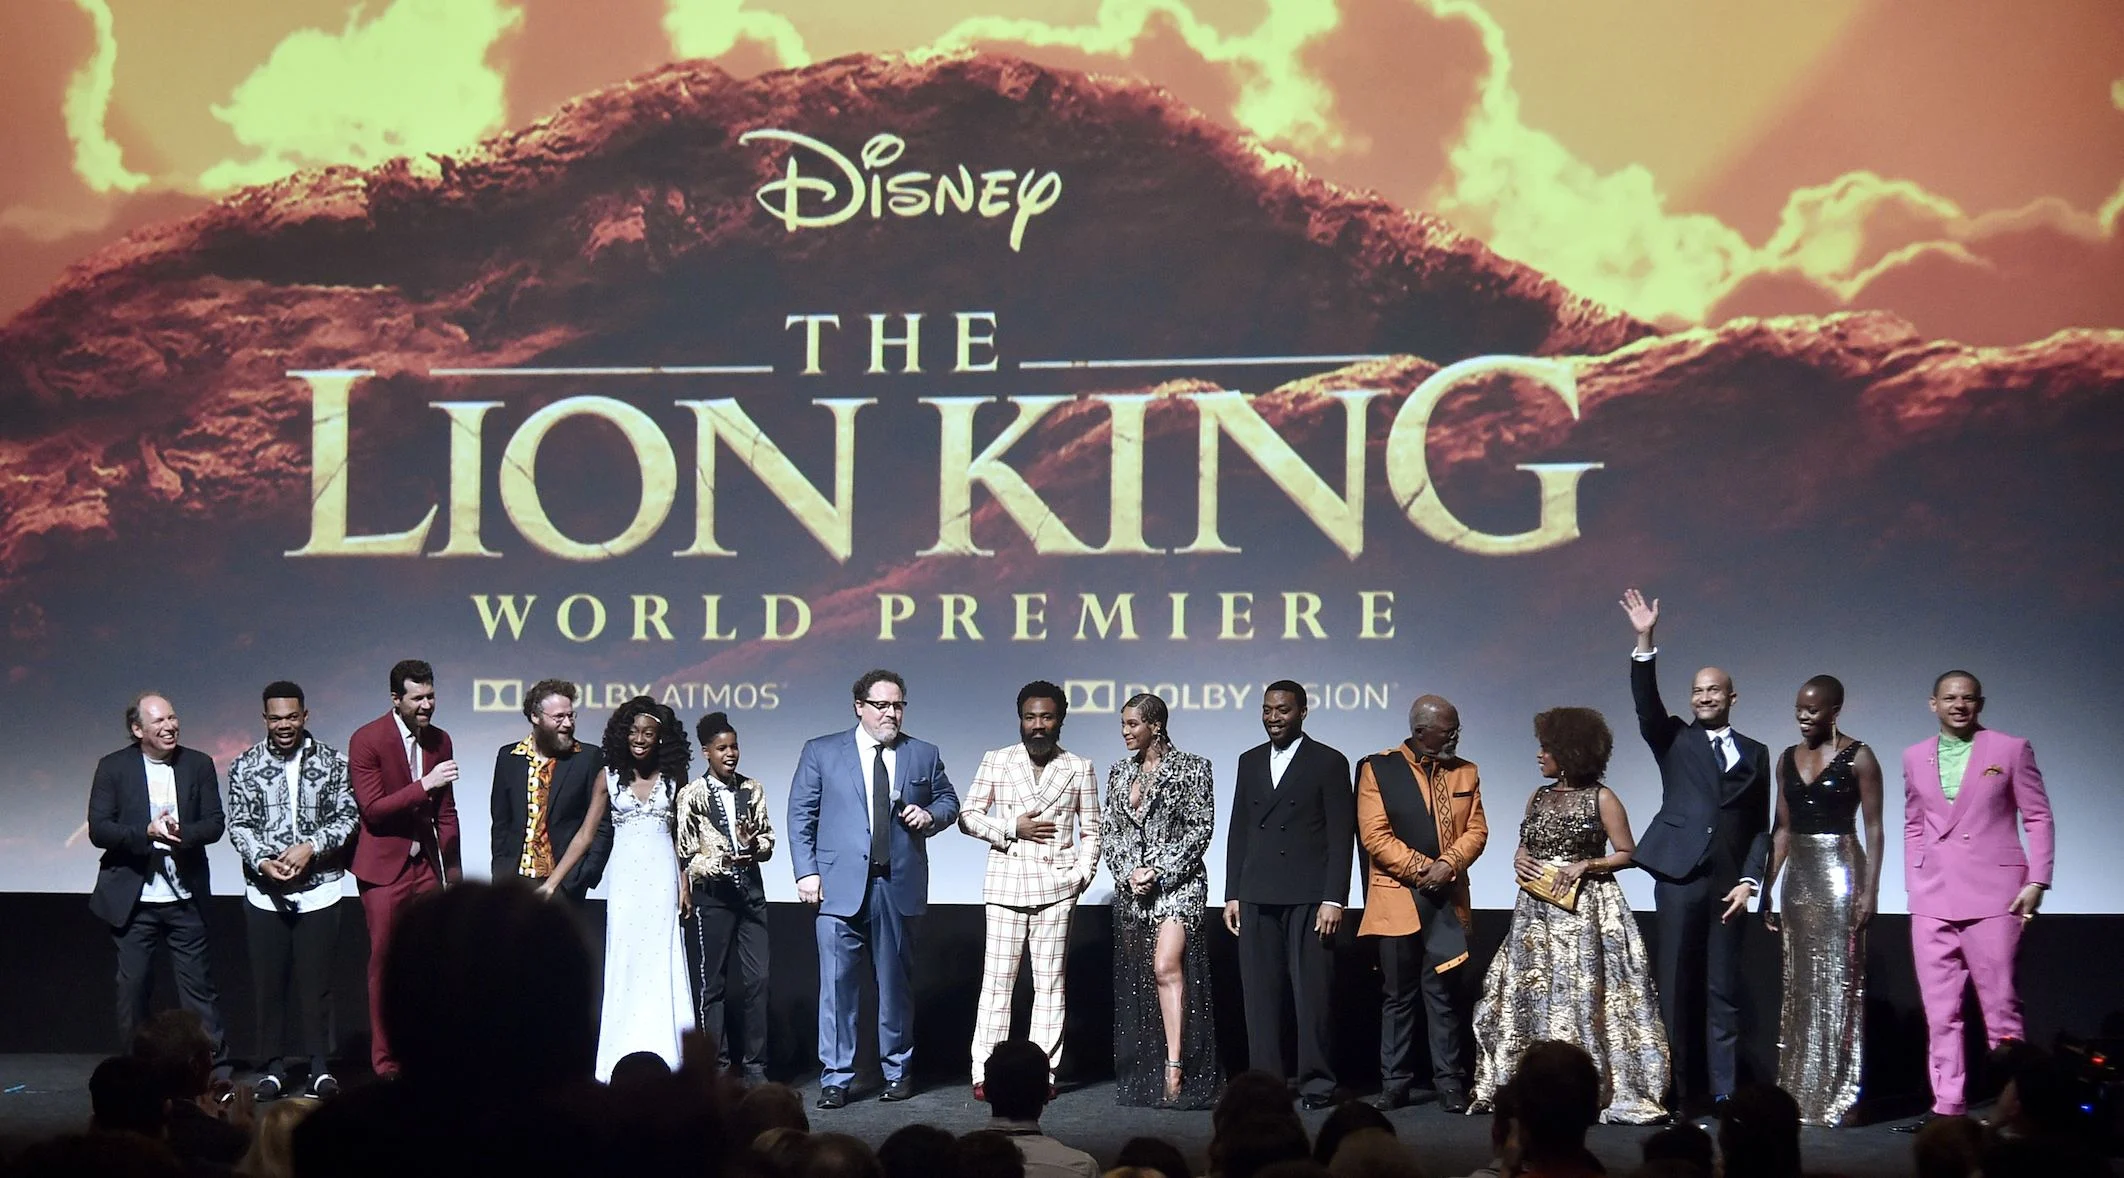 2019 Disney's Lion King Premiere, Disney's Lion King Premiere Full Cast Photo, Disney's 2019 Lion King Cast Photo